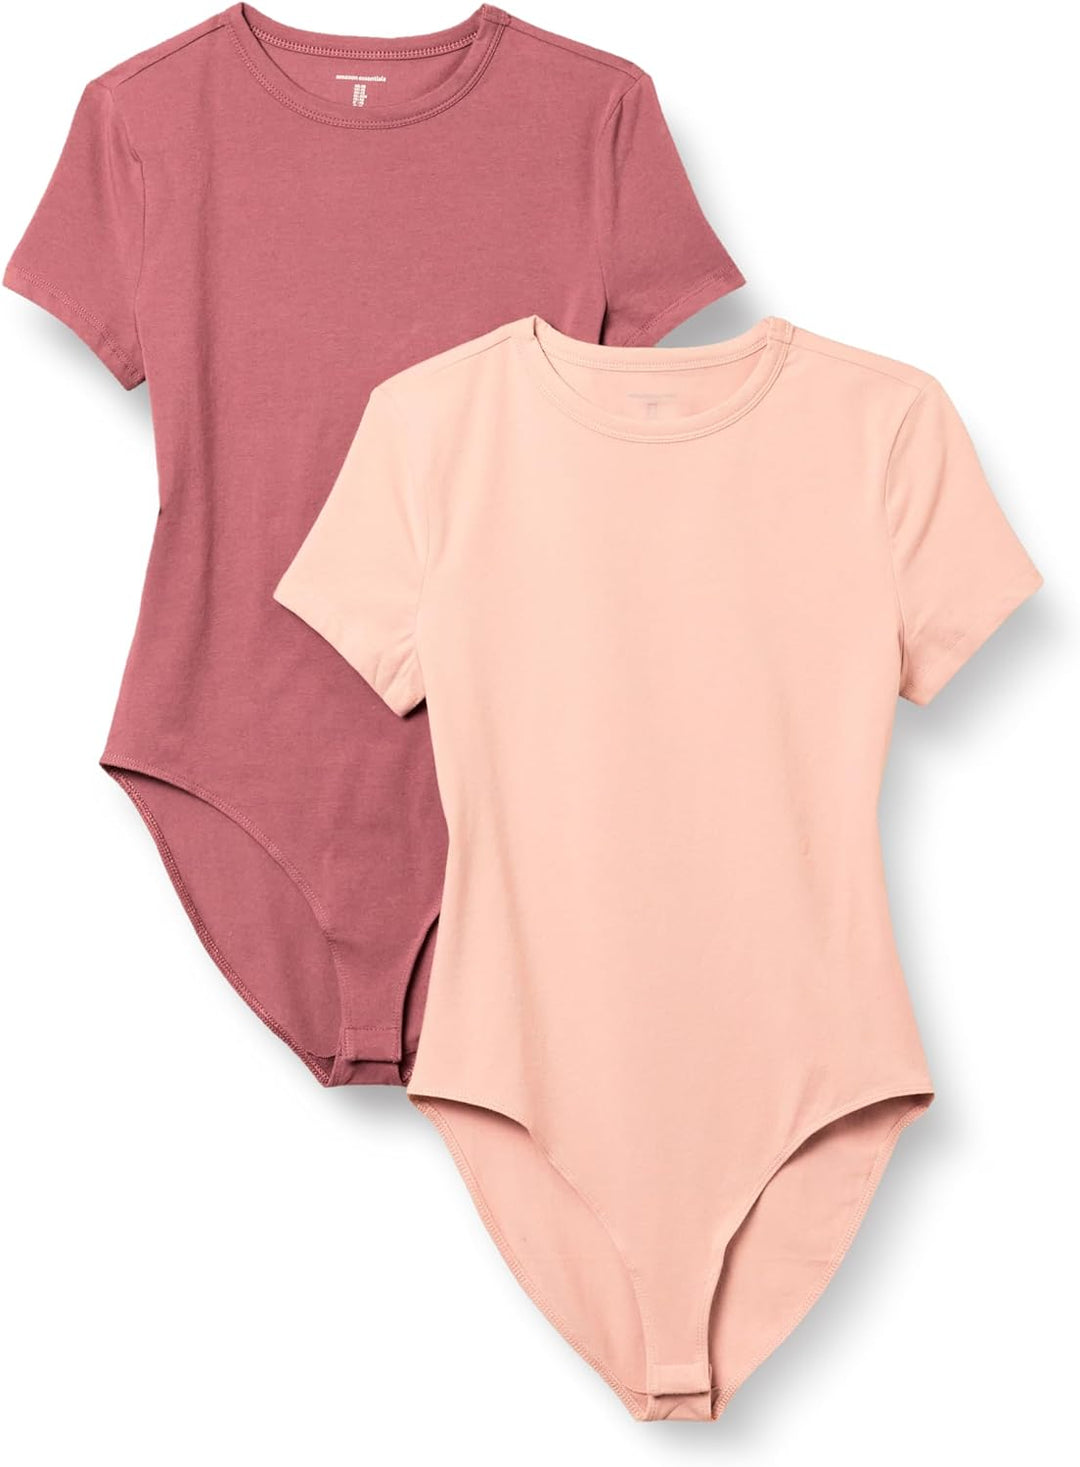 Essentials Women'S Stretch Cotton Jersey Slim-Fit T-Shirt Bodysuit, Pack of 2